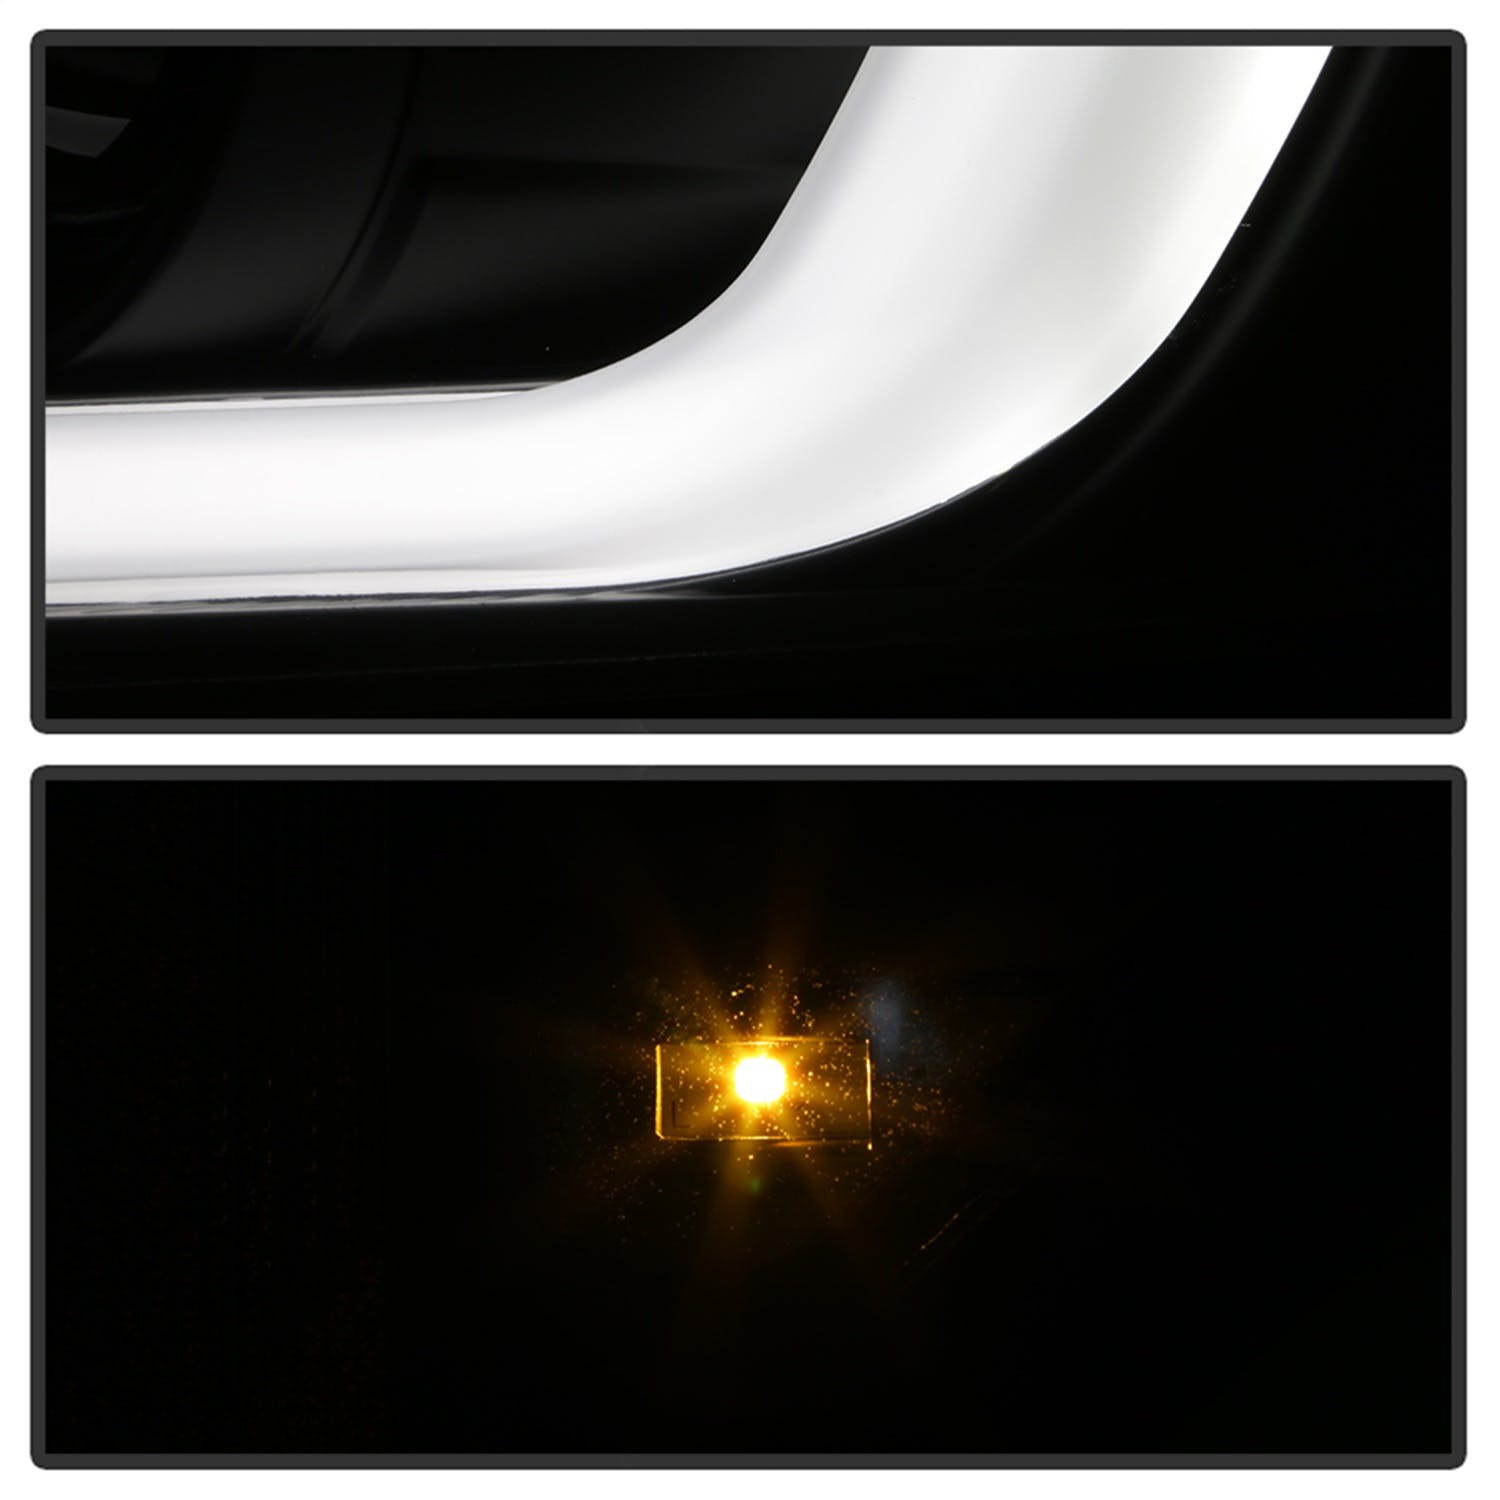 Spyder Auto 5086679 Projector Headlights